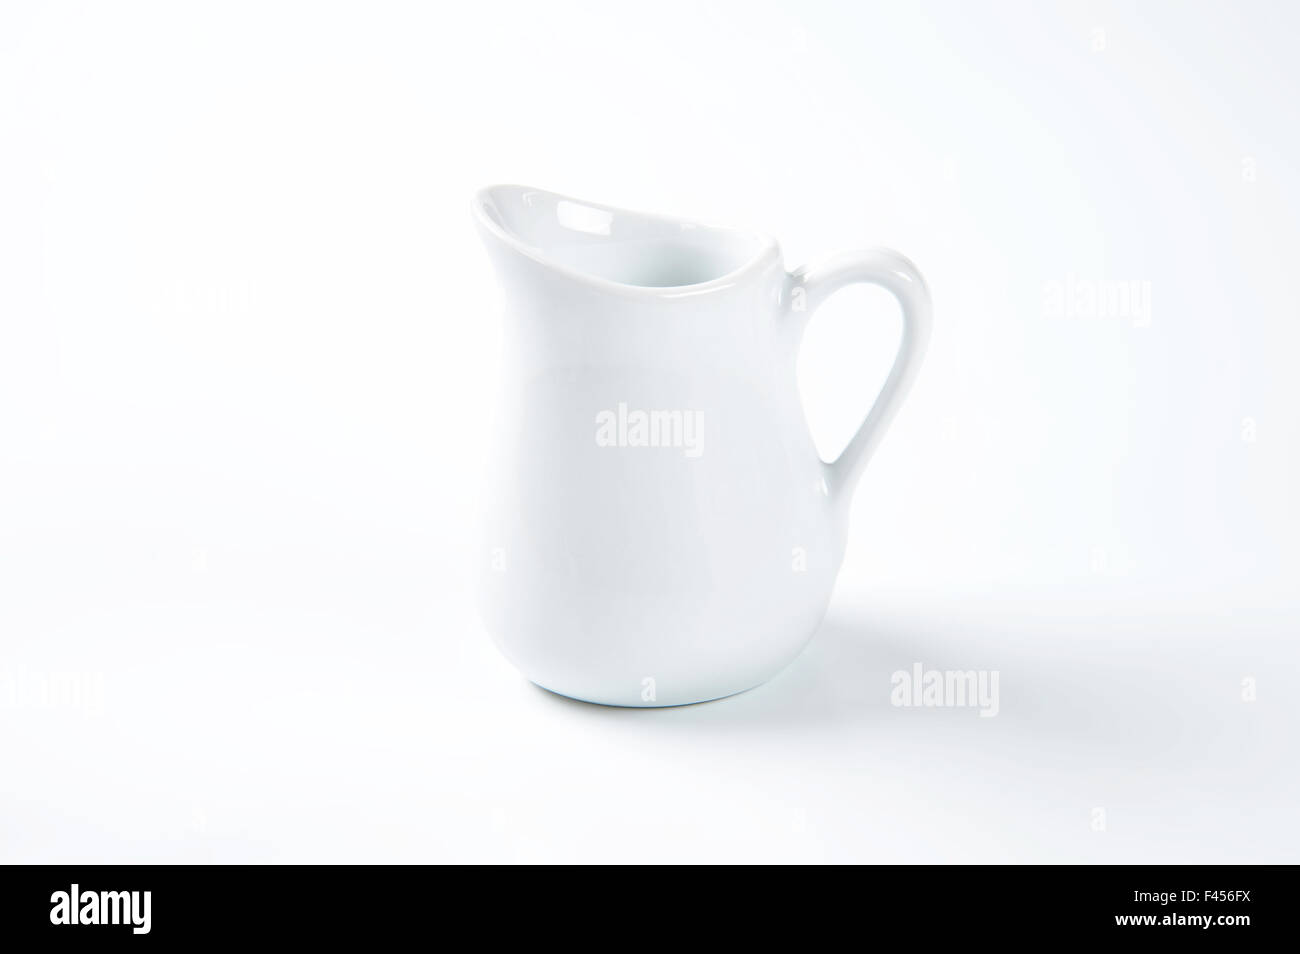 https://c8.alamy.com/comp/F456FX/white-milk-jug-on-white-background-F456FX.jpg